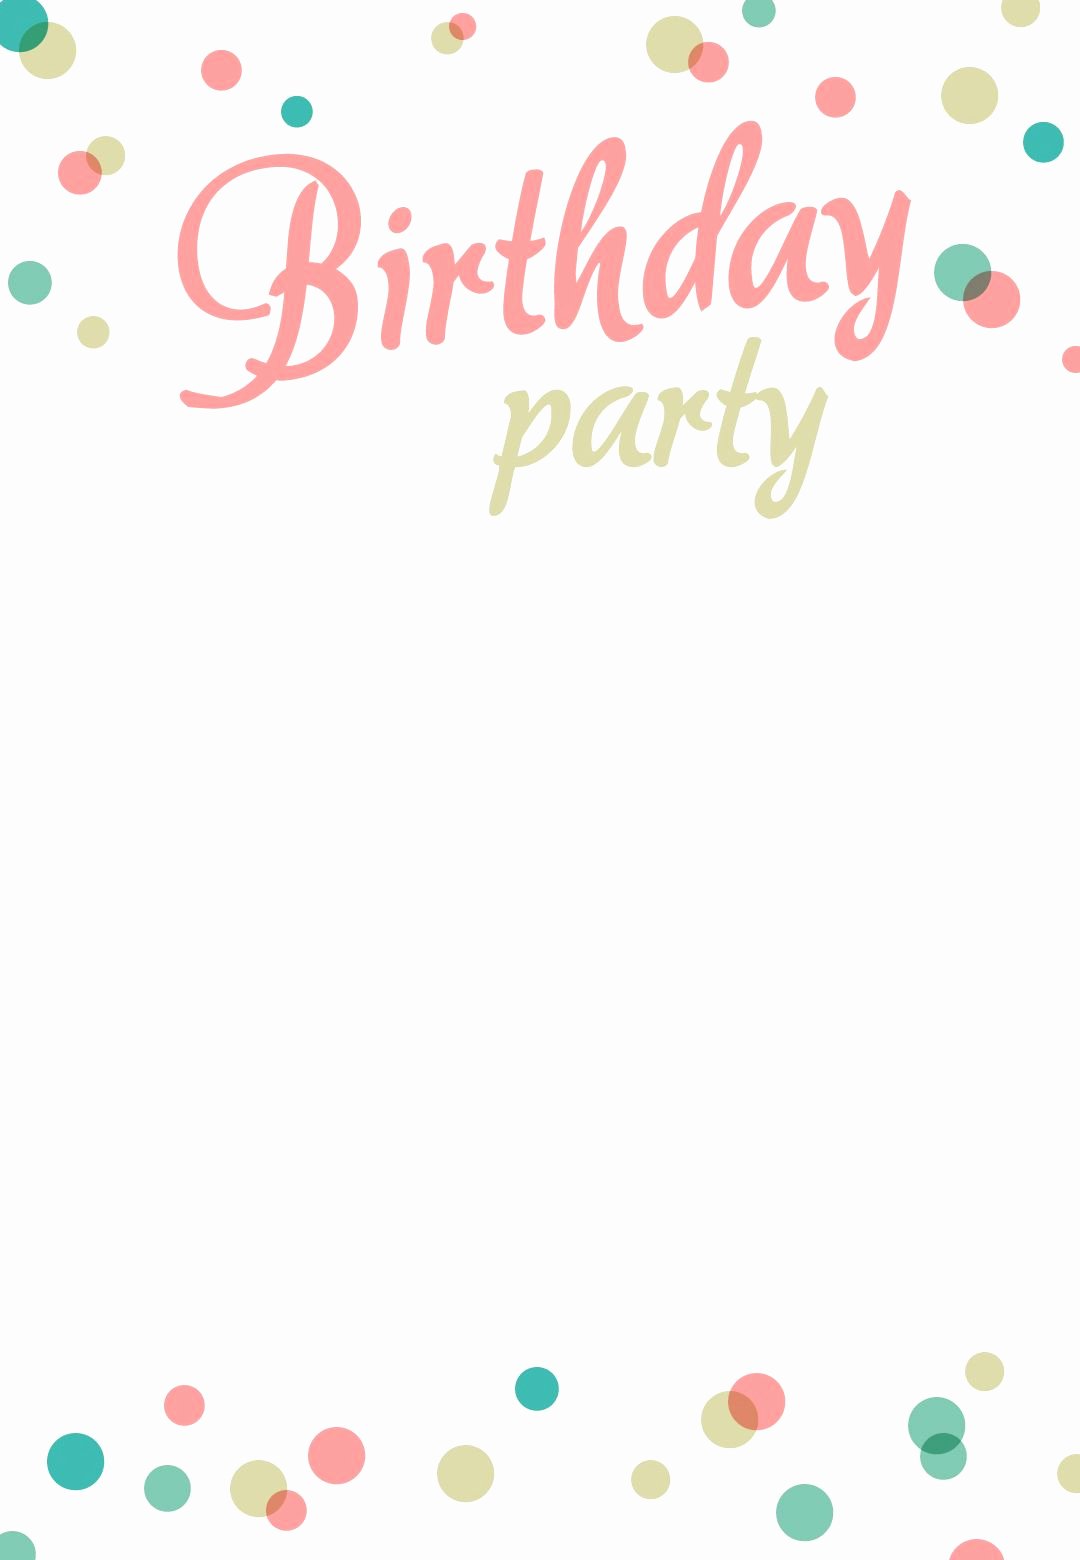 Free Birthday Card Templates Luxury Birthday Party Invitation Free Printable